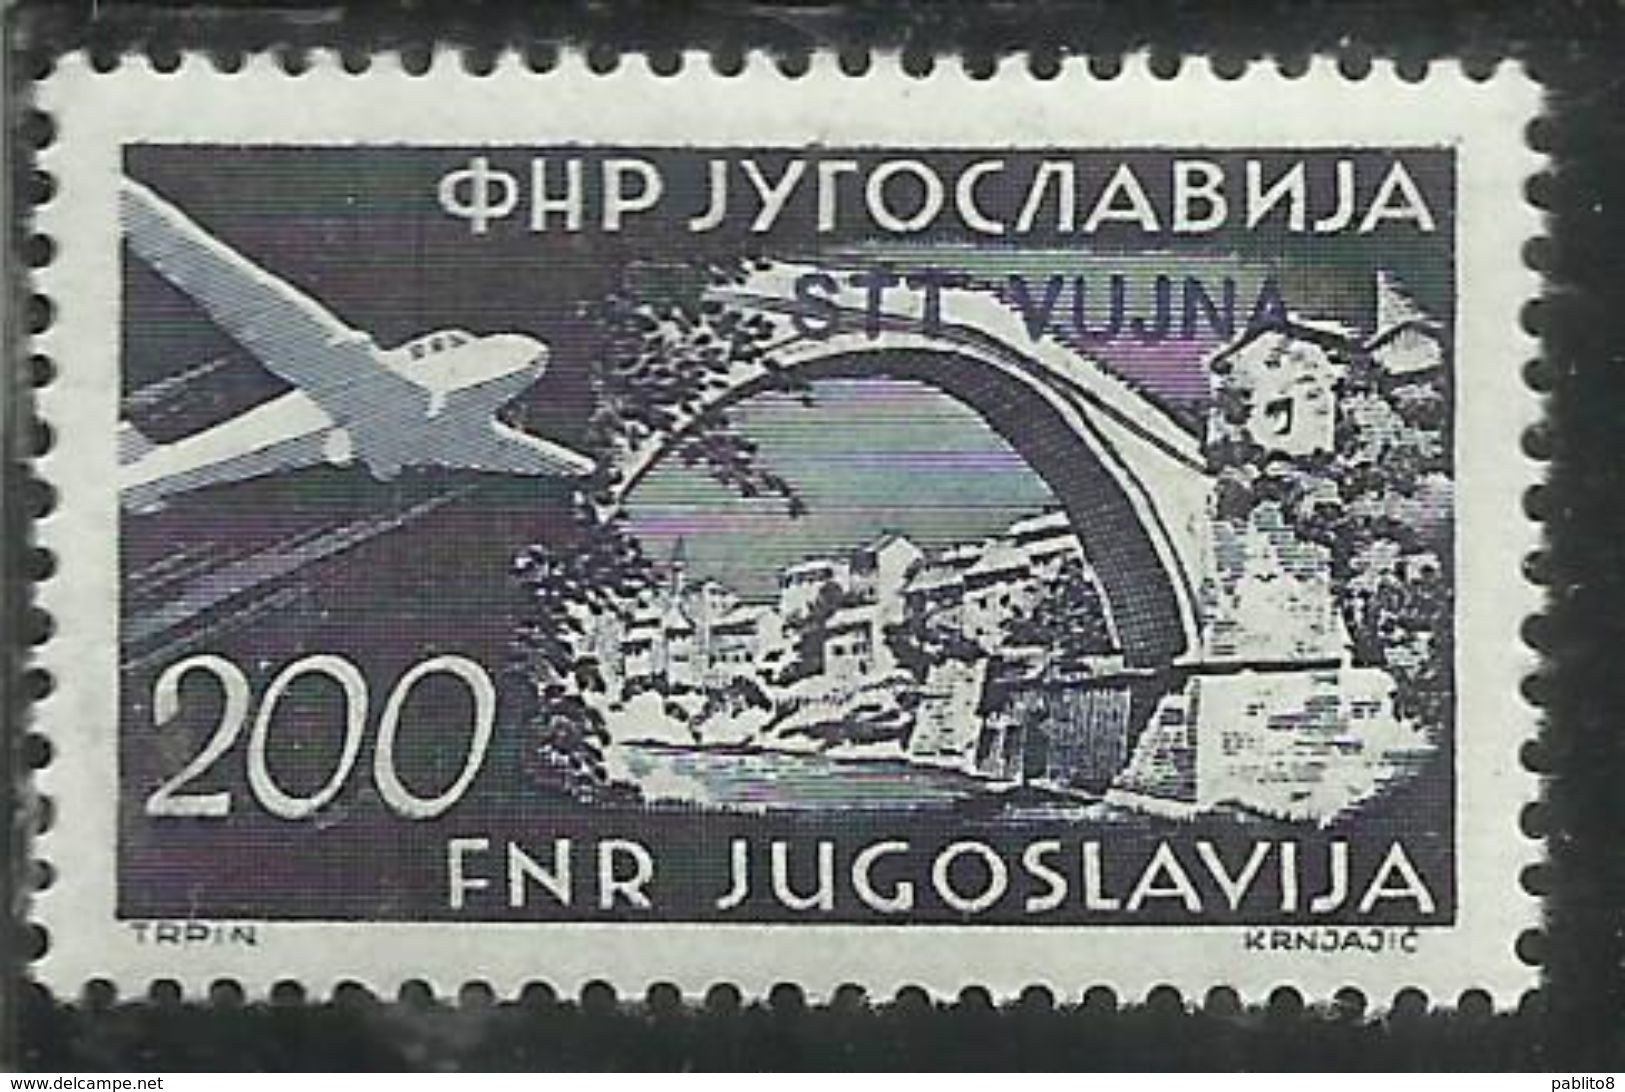 TRIESTE B 1954 POSTA AEREA AIR MAIL ESPERANTO CONGRESS FRANCOBOLLI DI YUGOSLAVIA SOPRASTAMPATO JUGOSLAVIA 200d MNH - Airmail